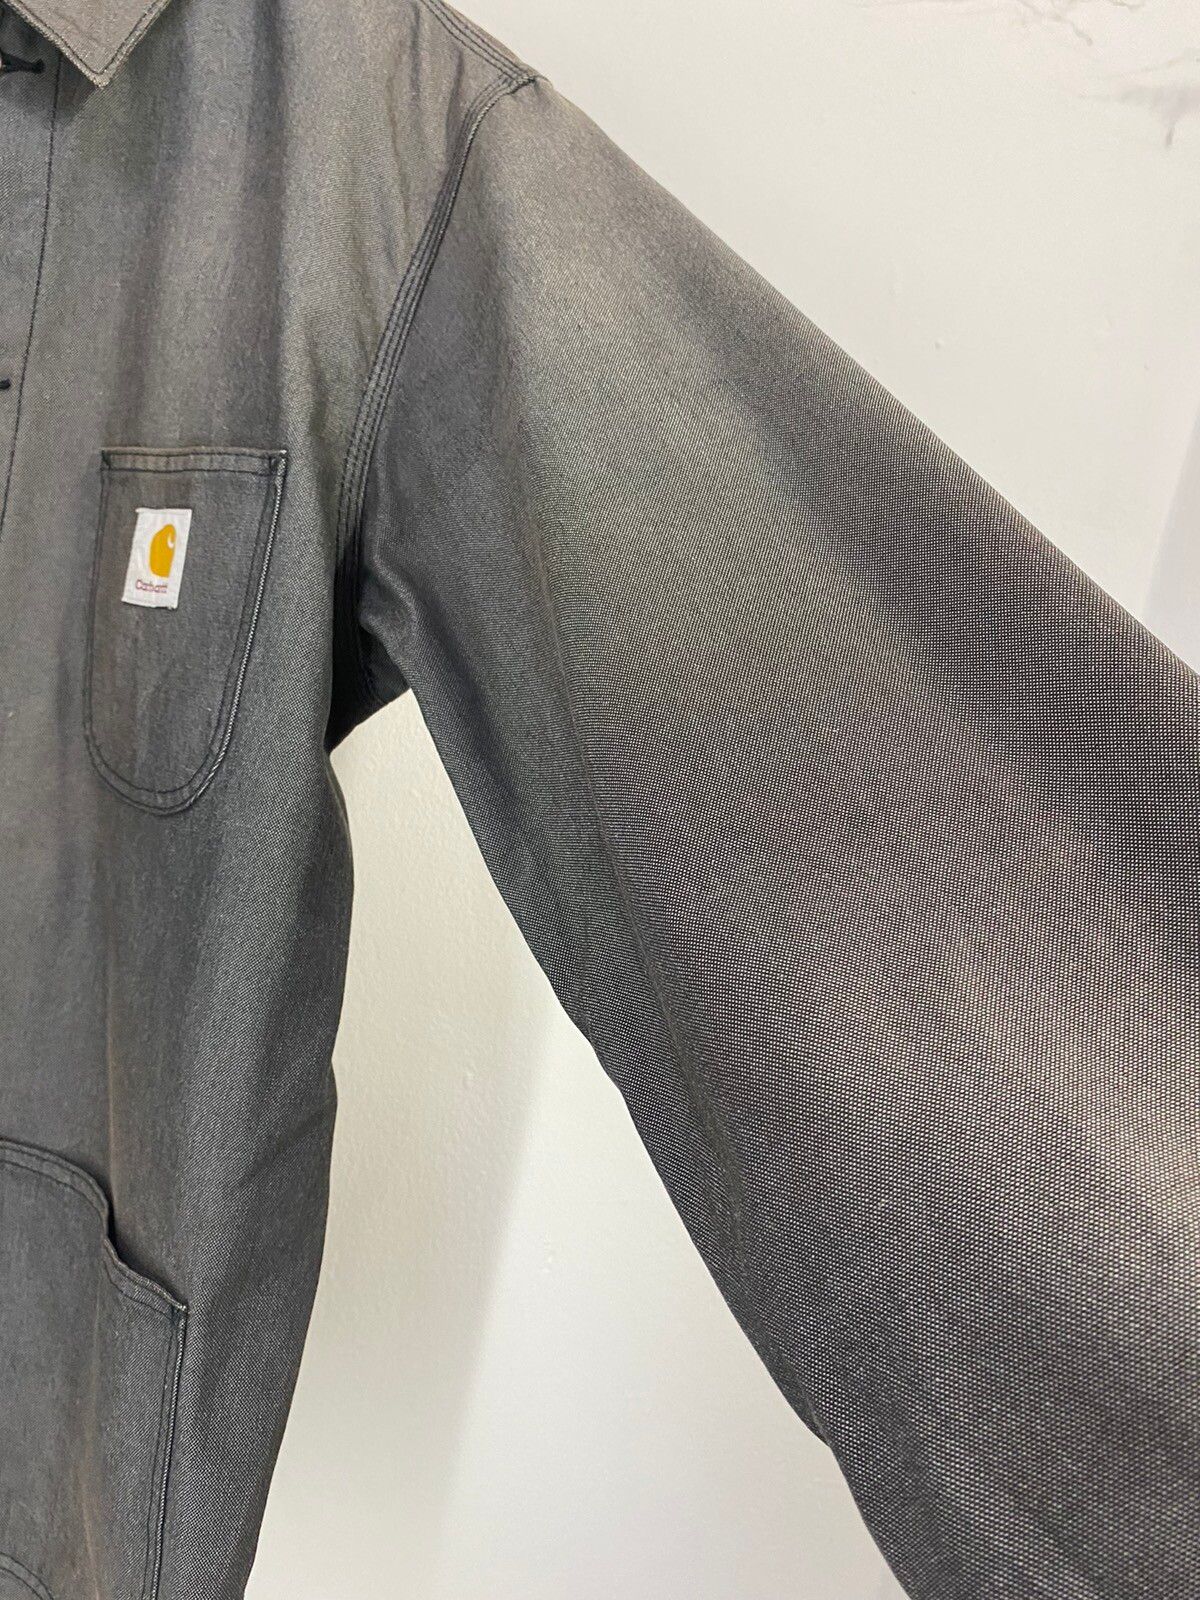 Carhartt Chore Jacket 4 Pocket Design Rare Design - 5